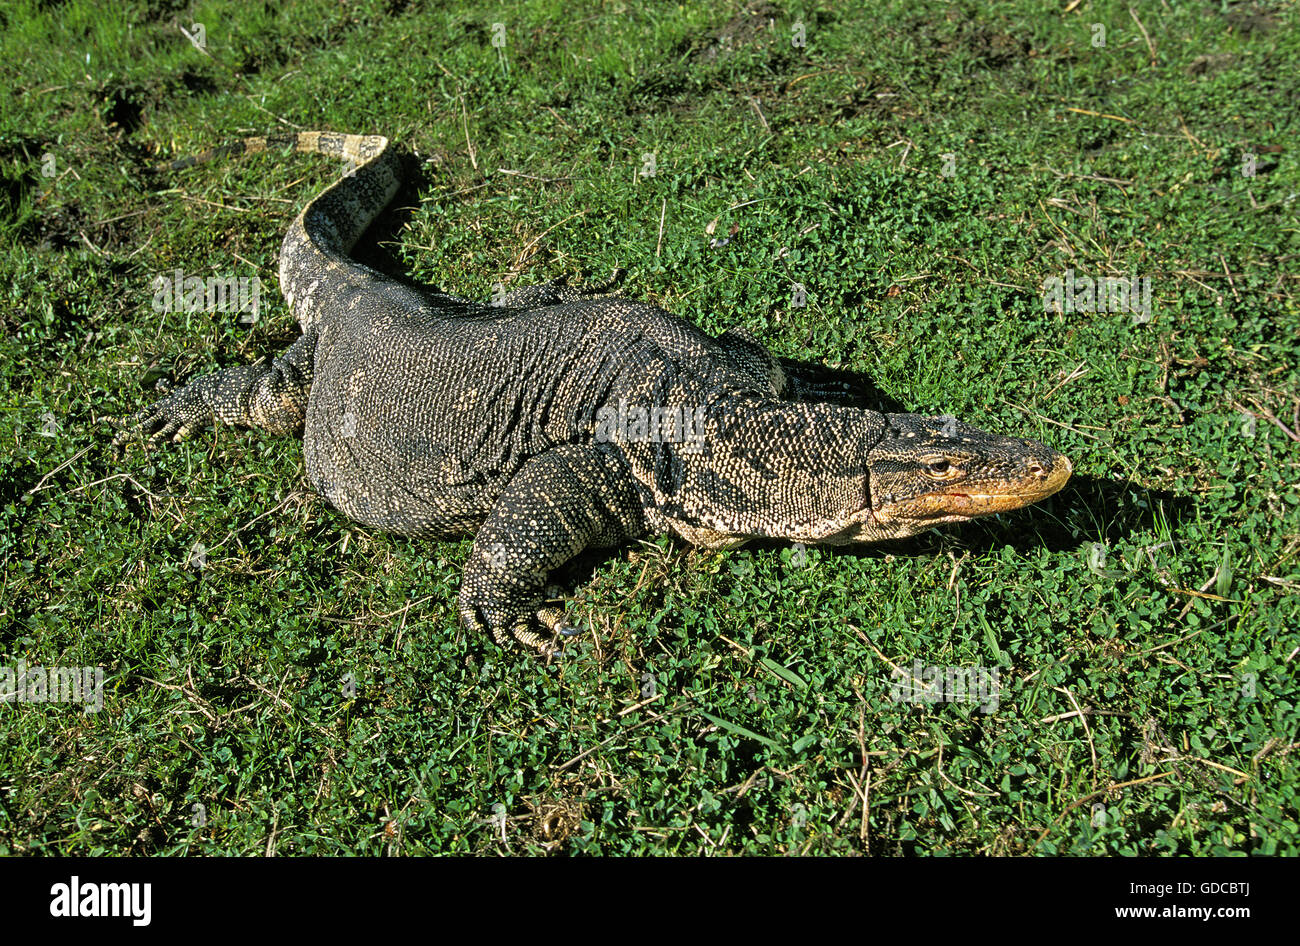 Water Monitor Lizard, varanus salvator, Adult on Grass Stock Photo